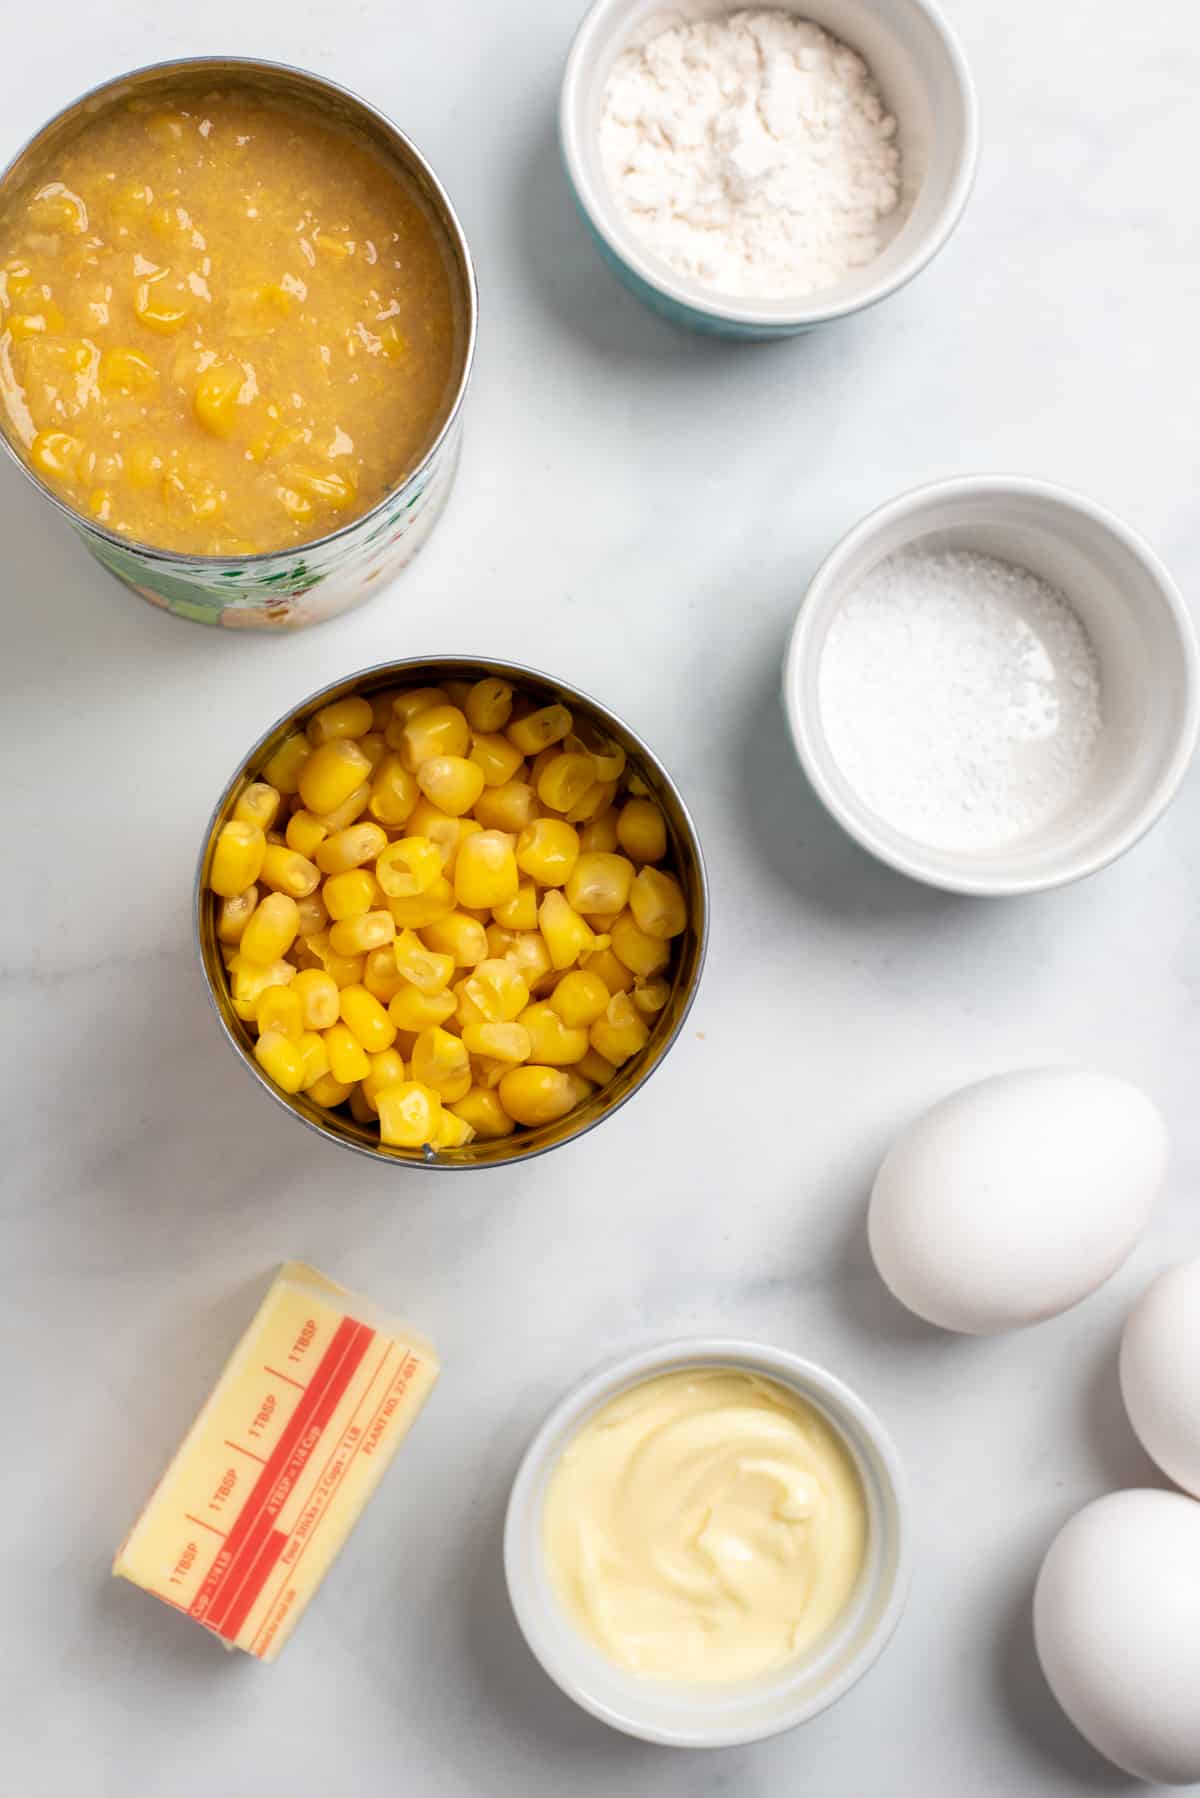 ingredients for corn souffle casserole.